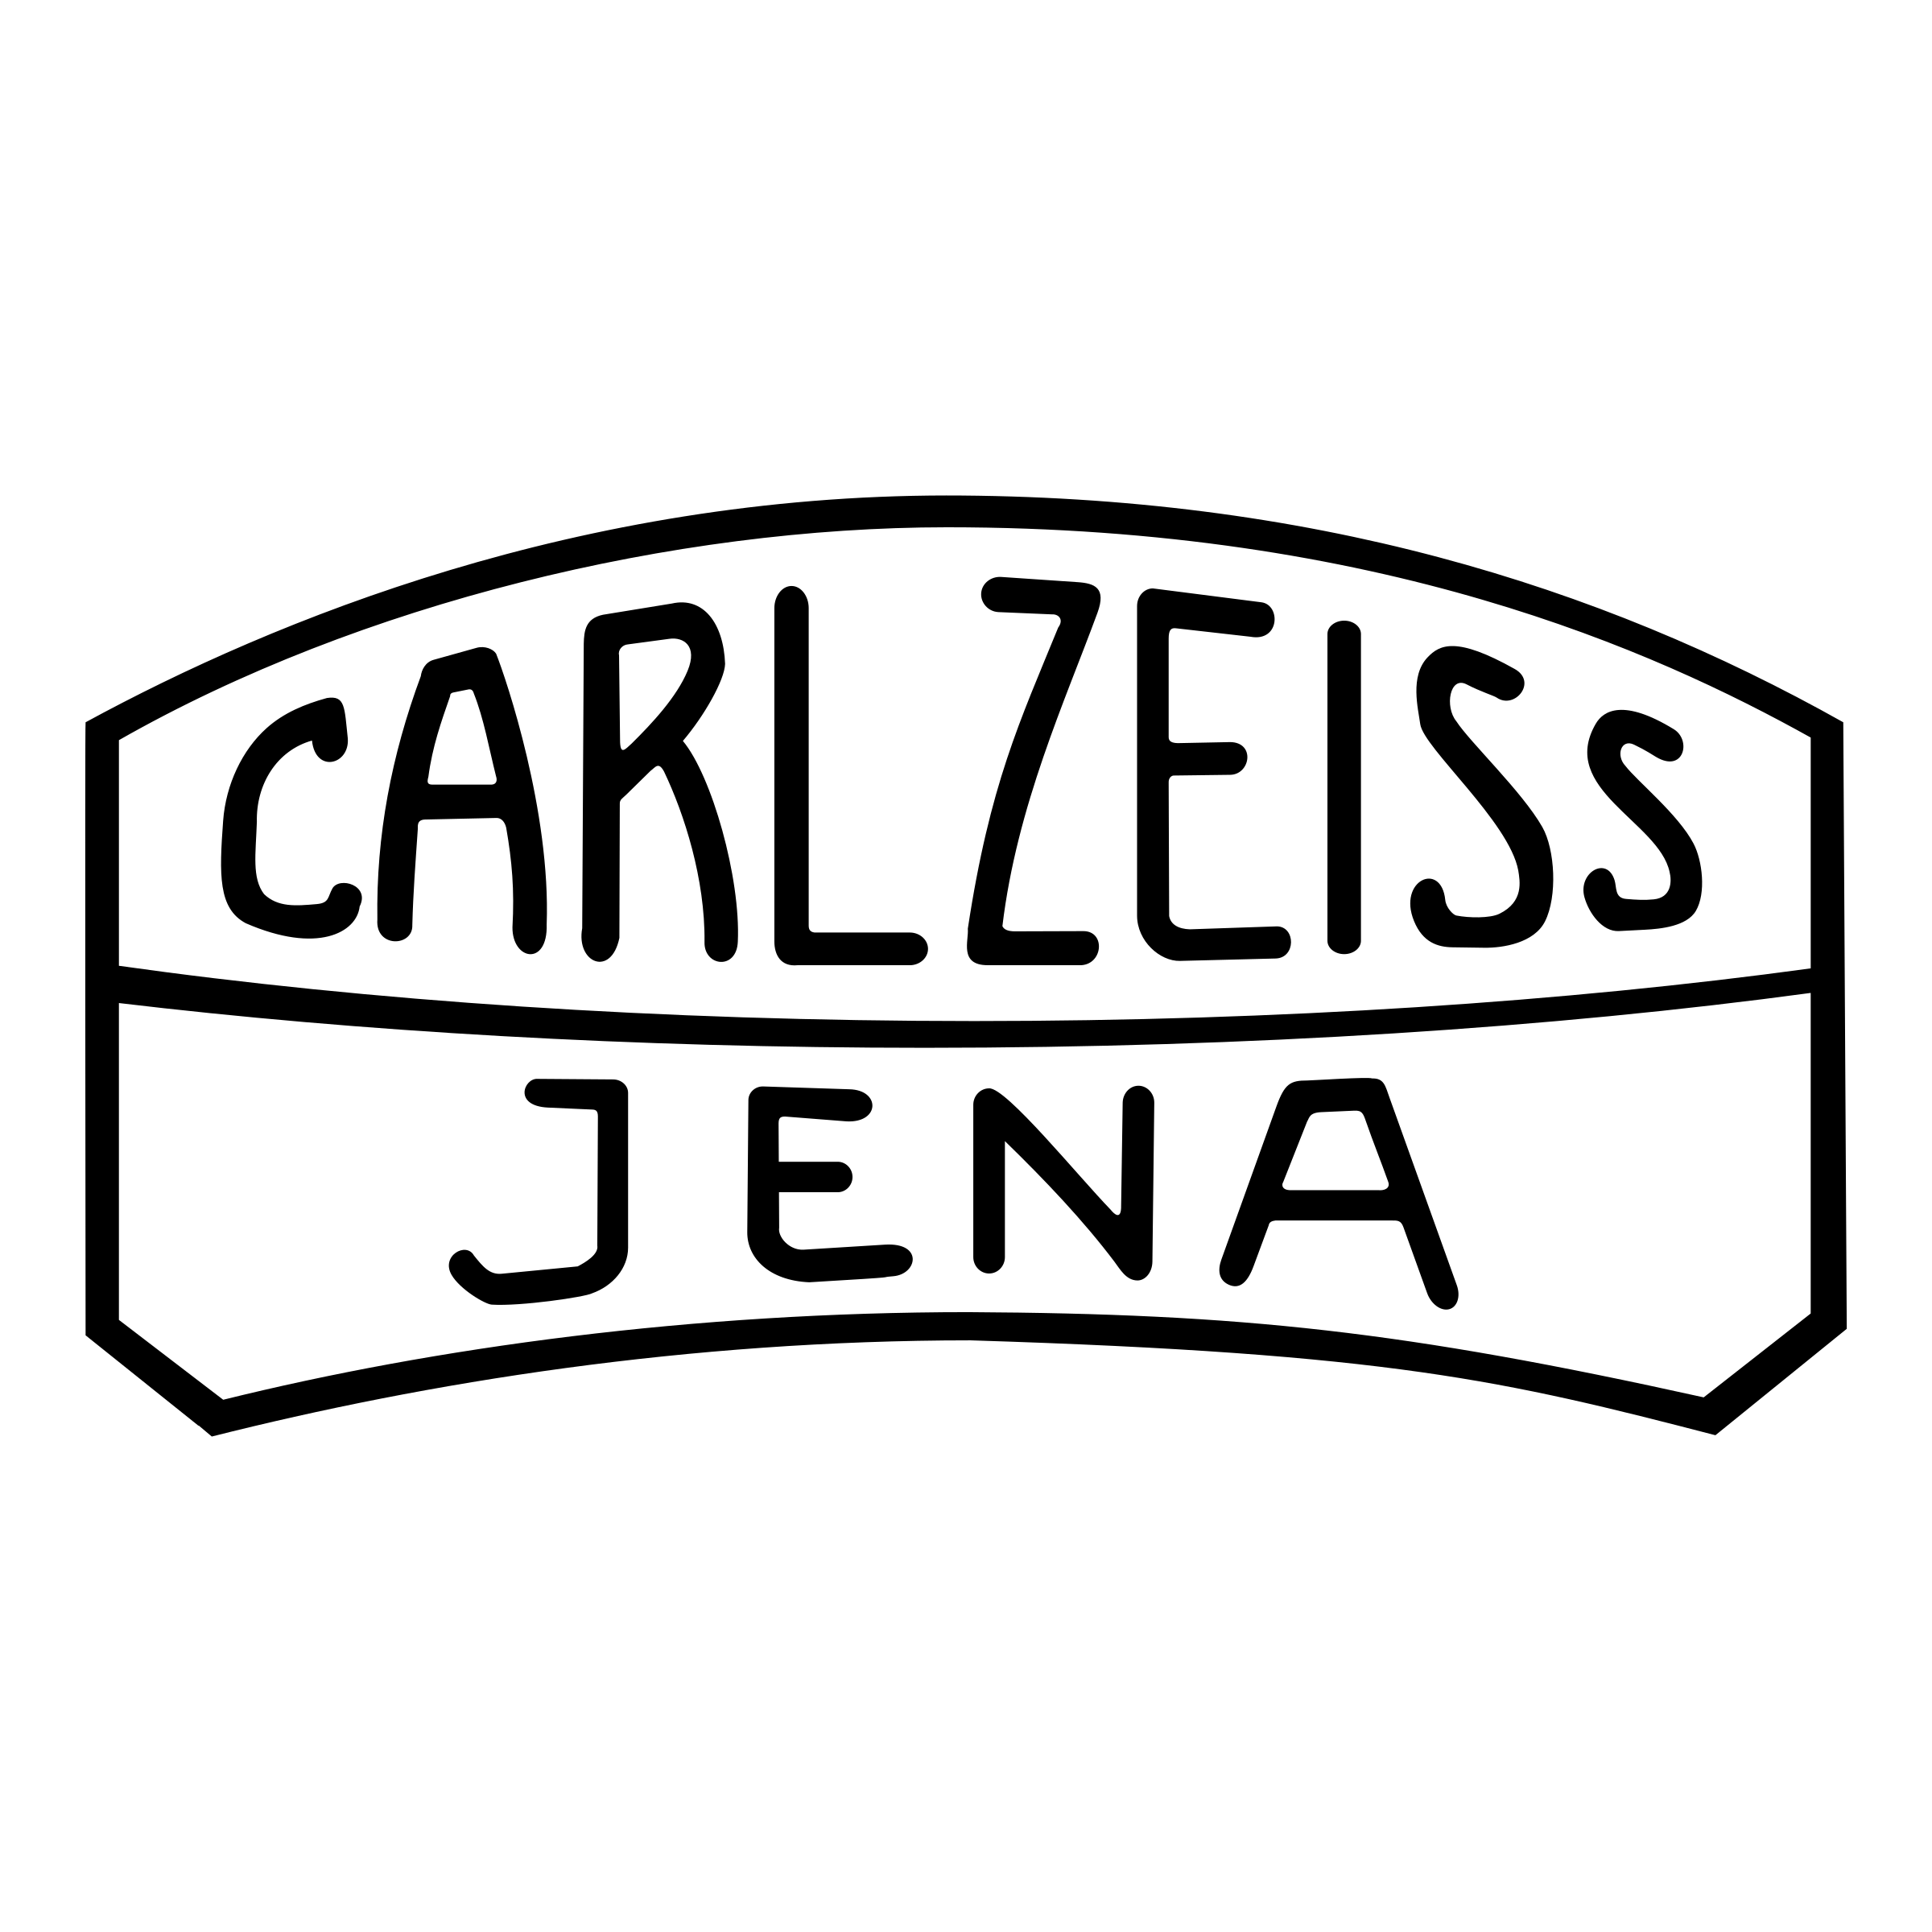 Zeiss Logo - Carl Zeiss Jena Logo PNG Transparent & SVG Vector - Freebie Supply